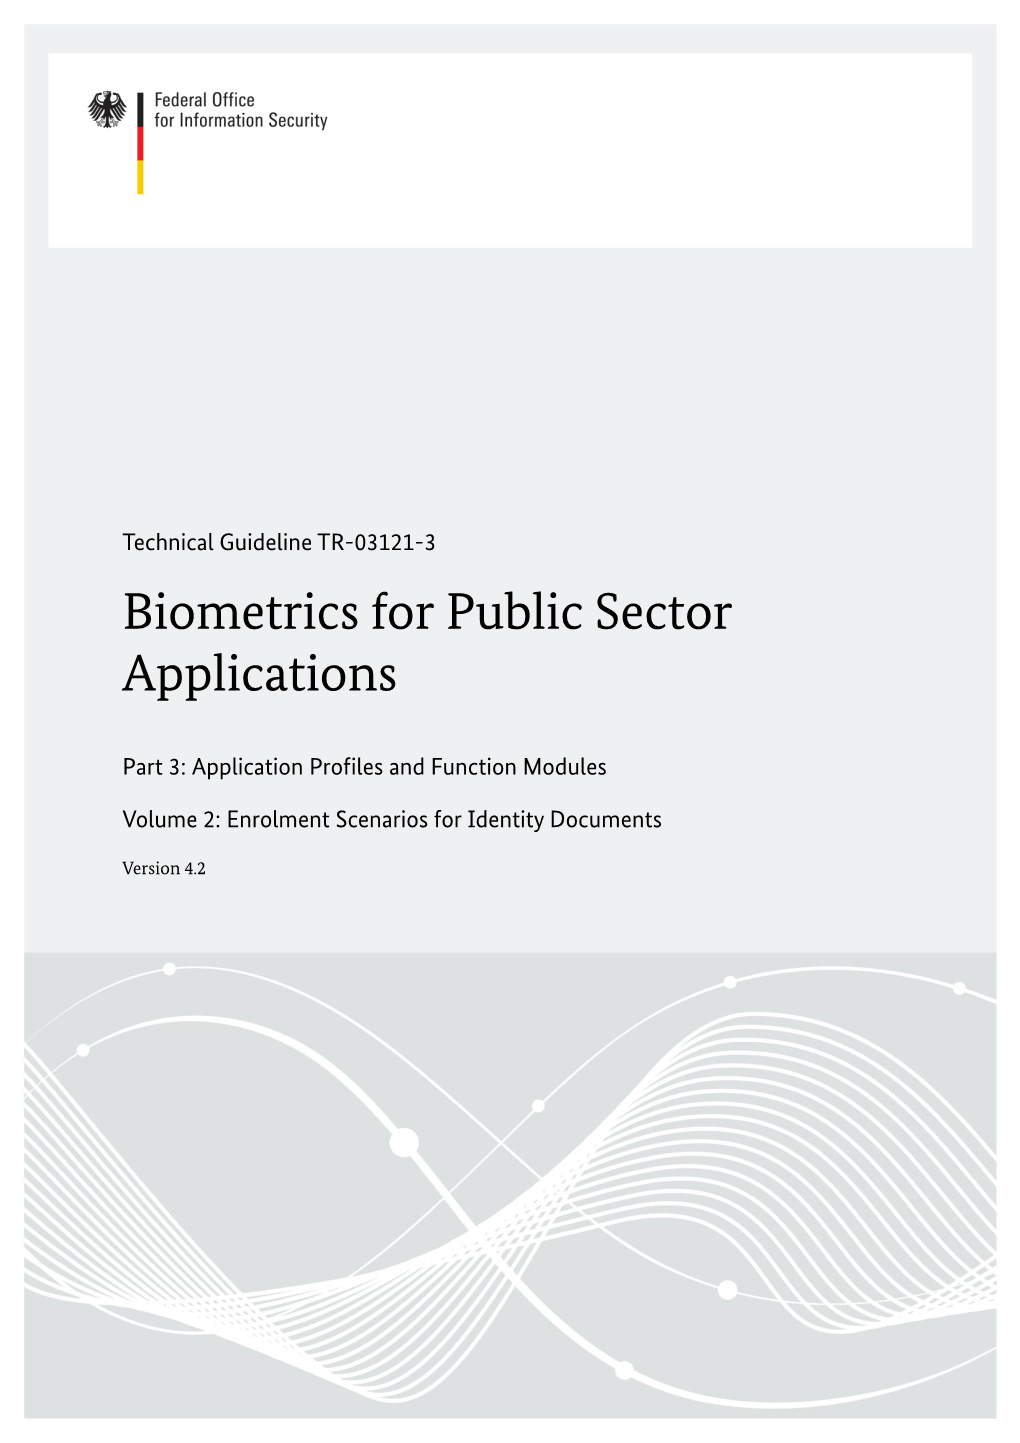 BSI TR-03121 Biometric for Public Sector Applications: Part 3, Volume